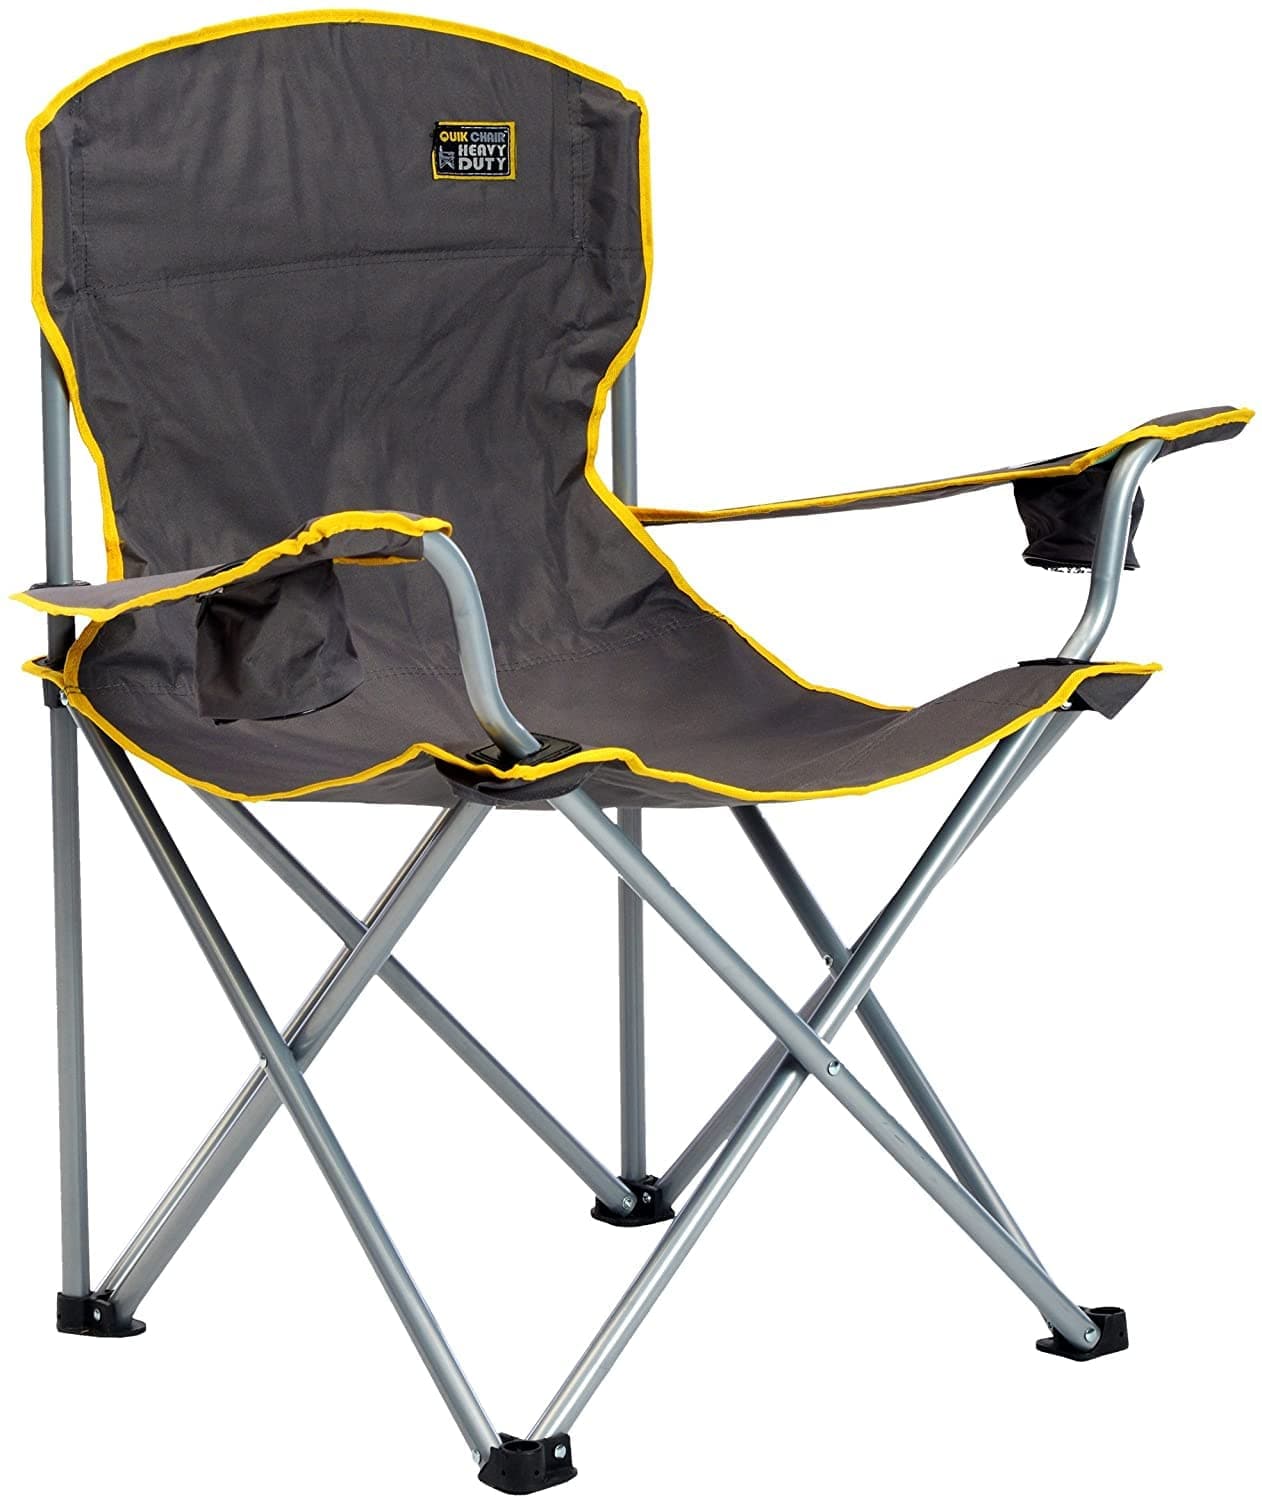 ShelterLogic Quik Chair Heavy Duty Folding Camp Chair - XL - Open Box - Senior.com Beach Chairs